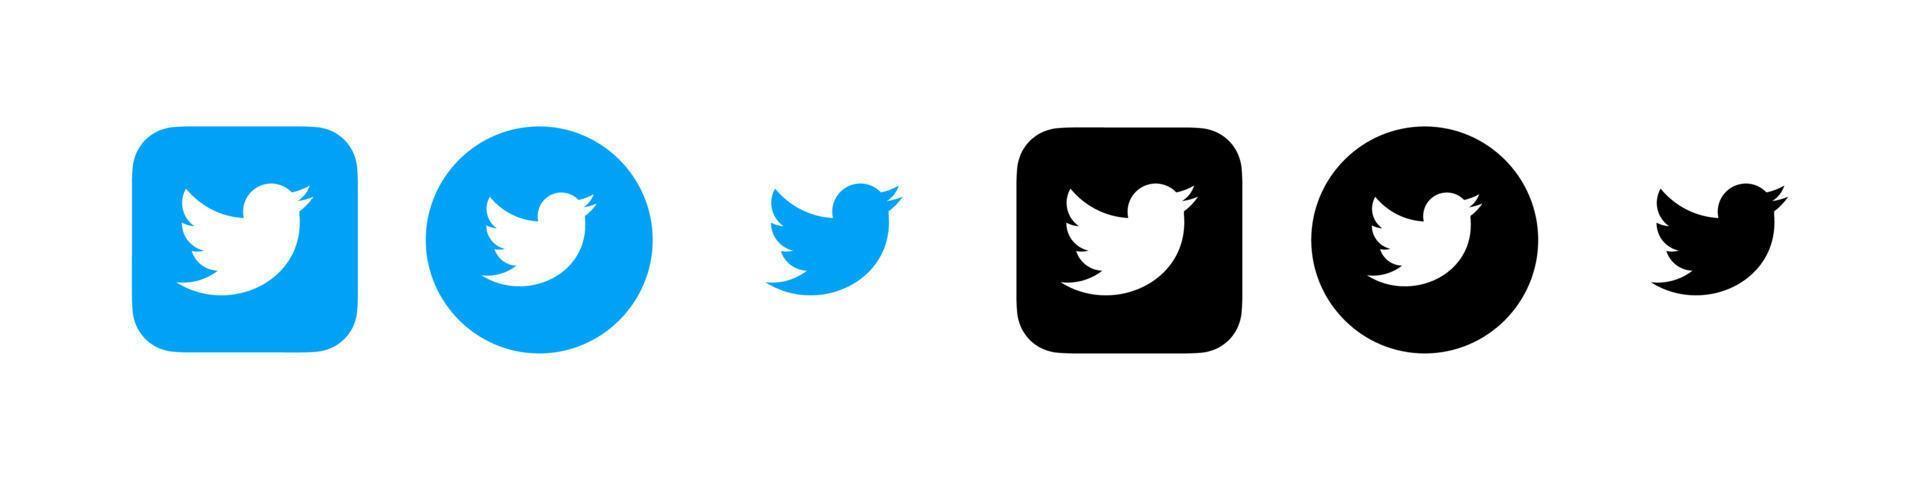 Twitter logo, Twitter icon vector, Twitter symbol free vector